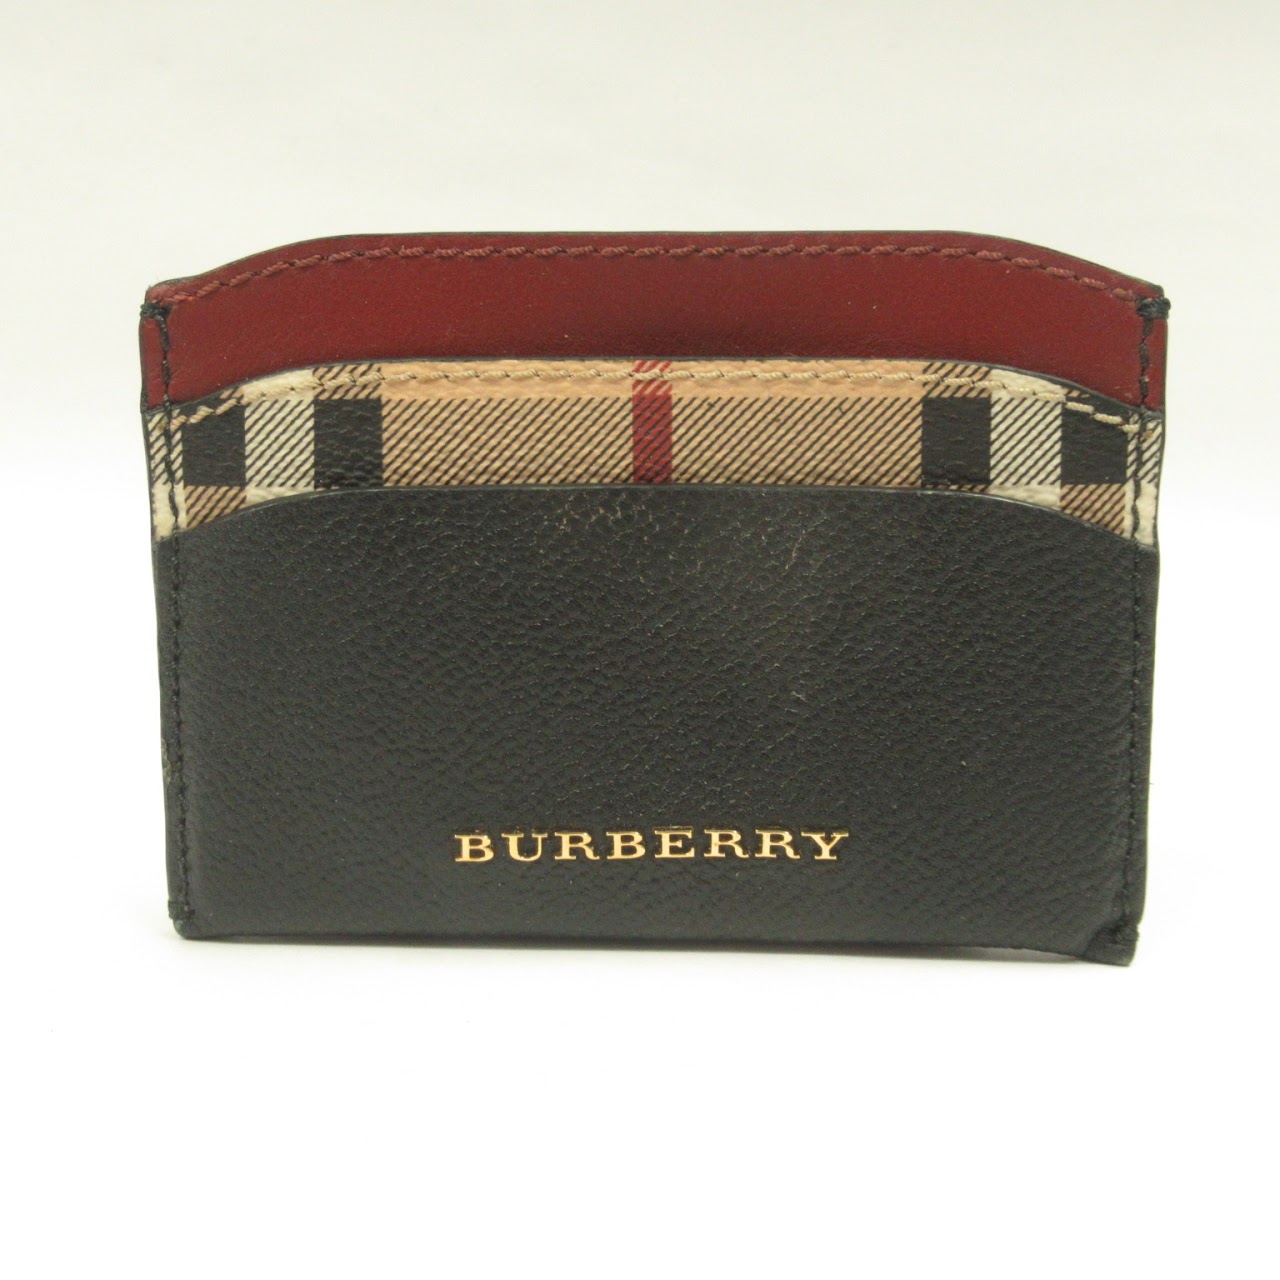 Burberry Card Case